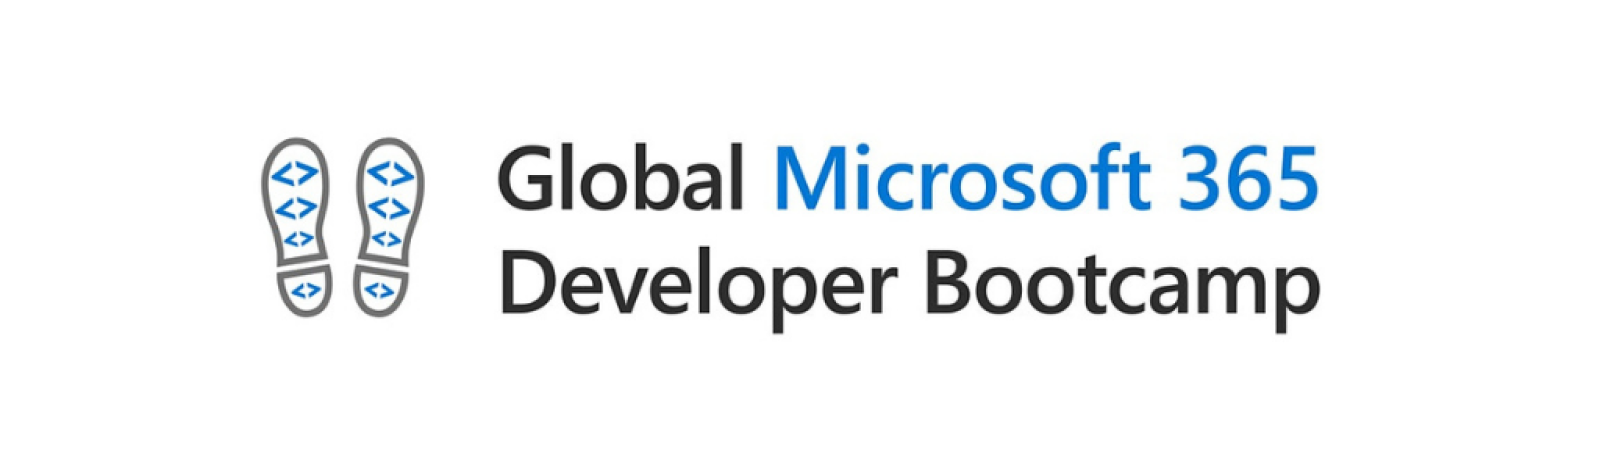 Global Microsoft 365 Developer Bootcamps